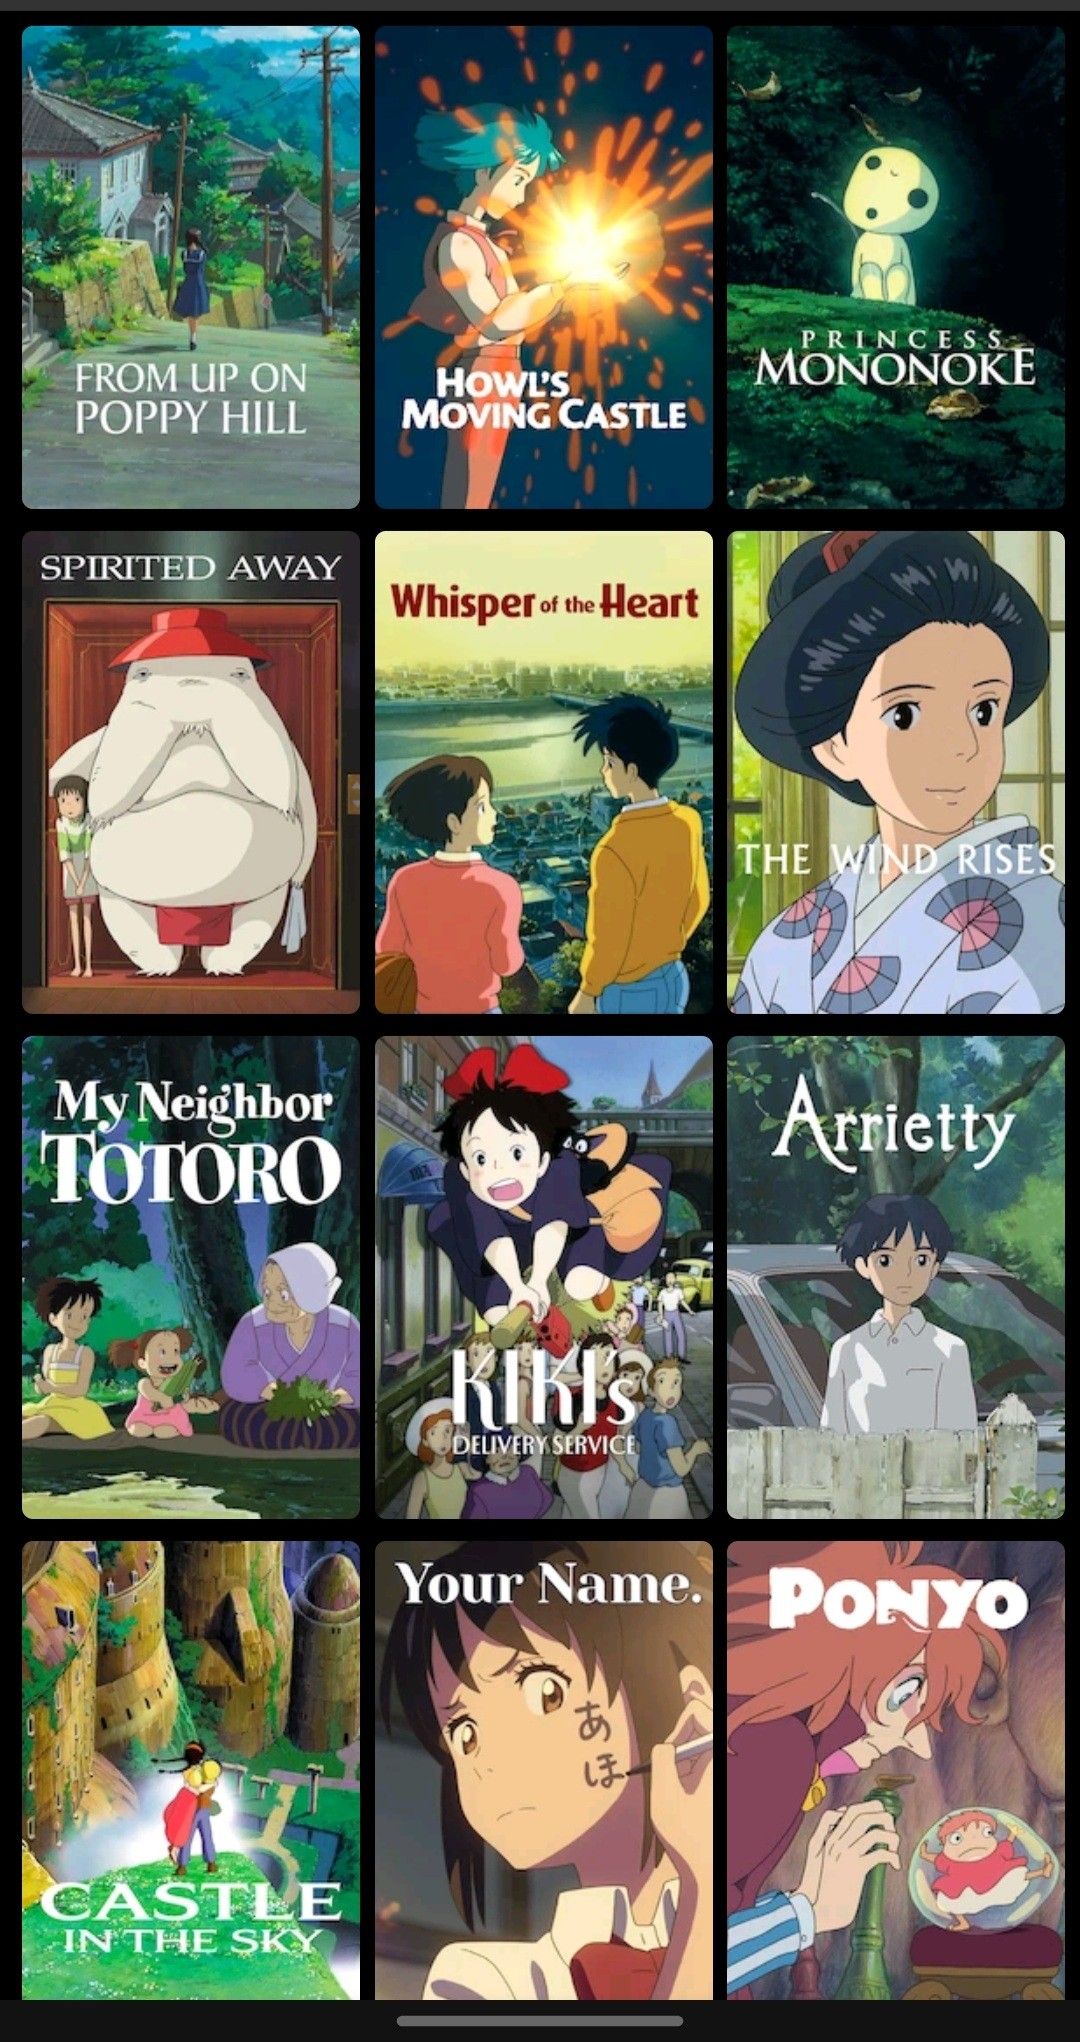 The art of living, according to Miyazaki, Lifestyle